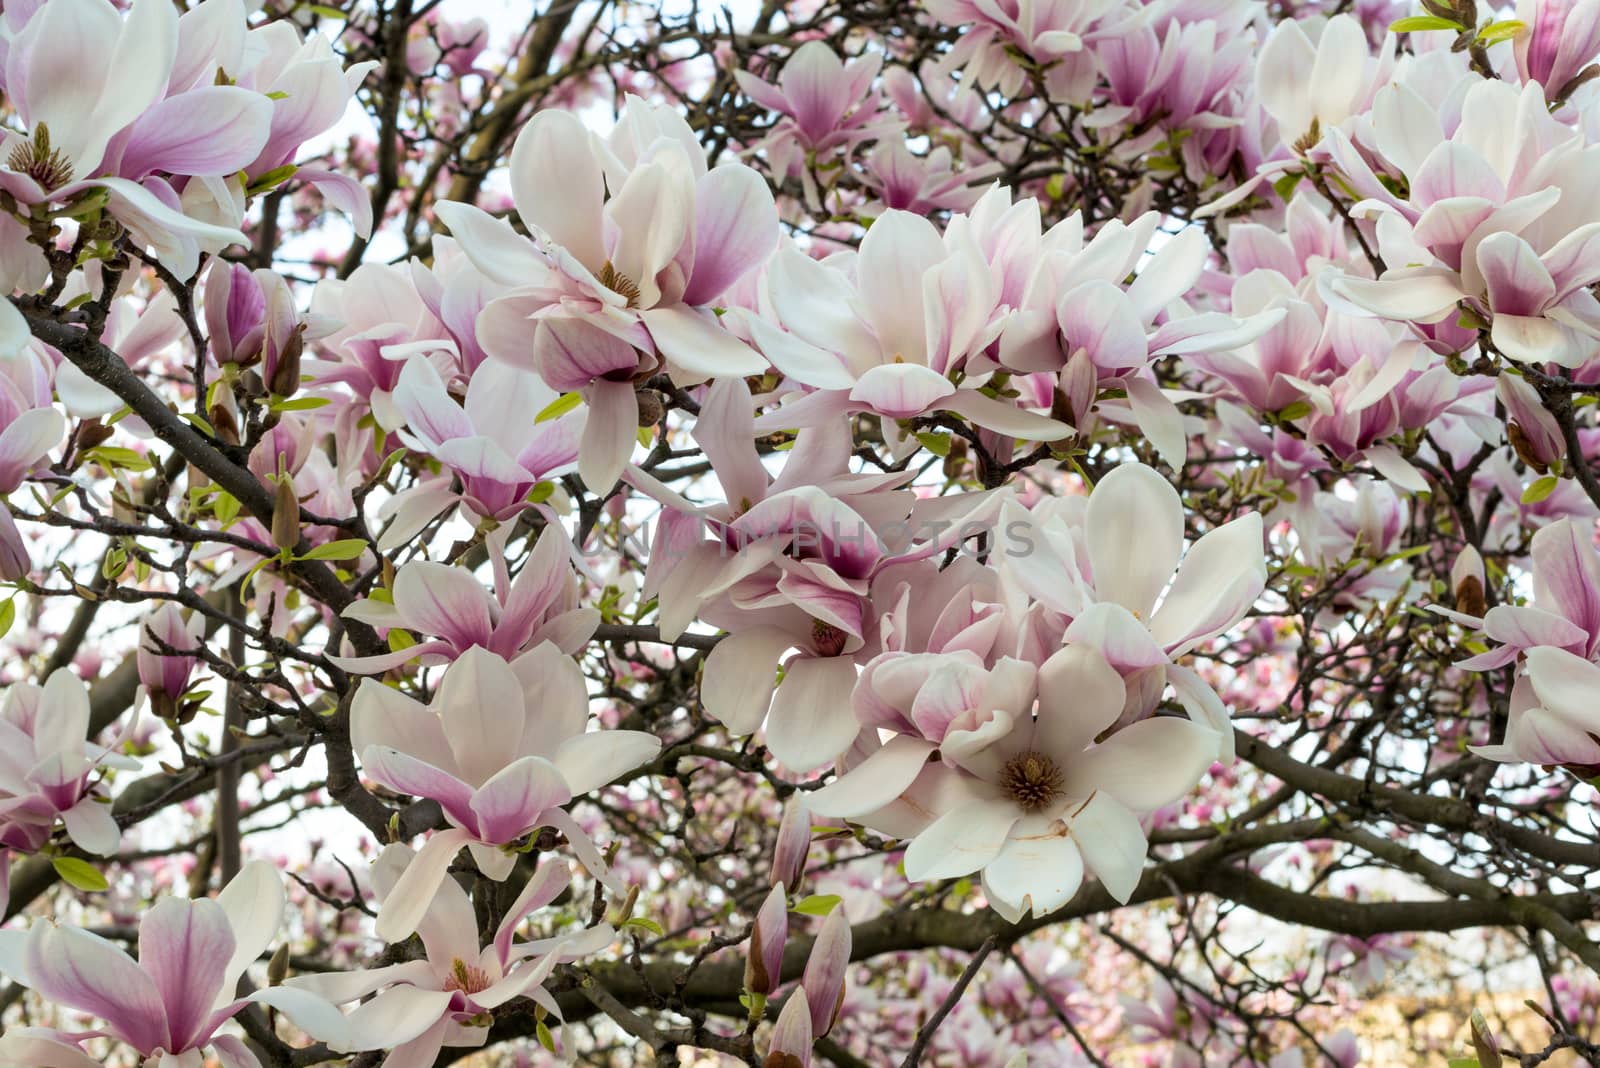 Blossom pink magnolia flowers